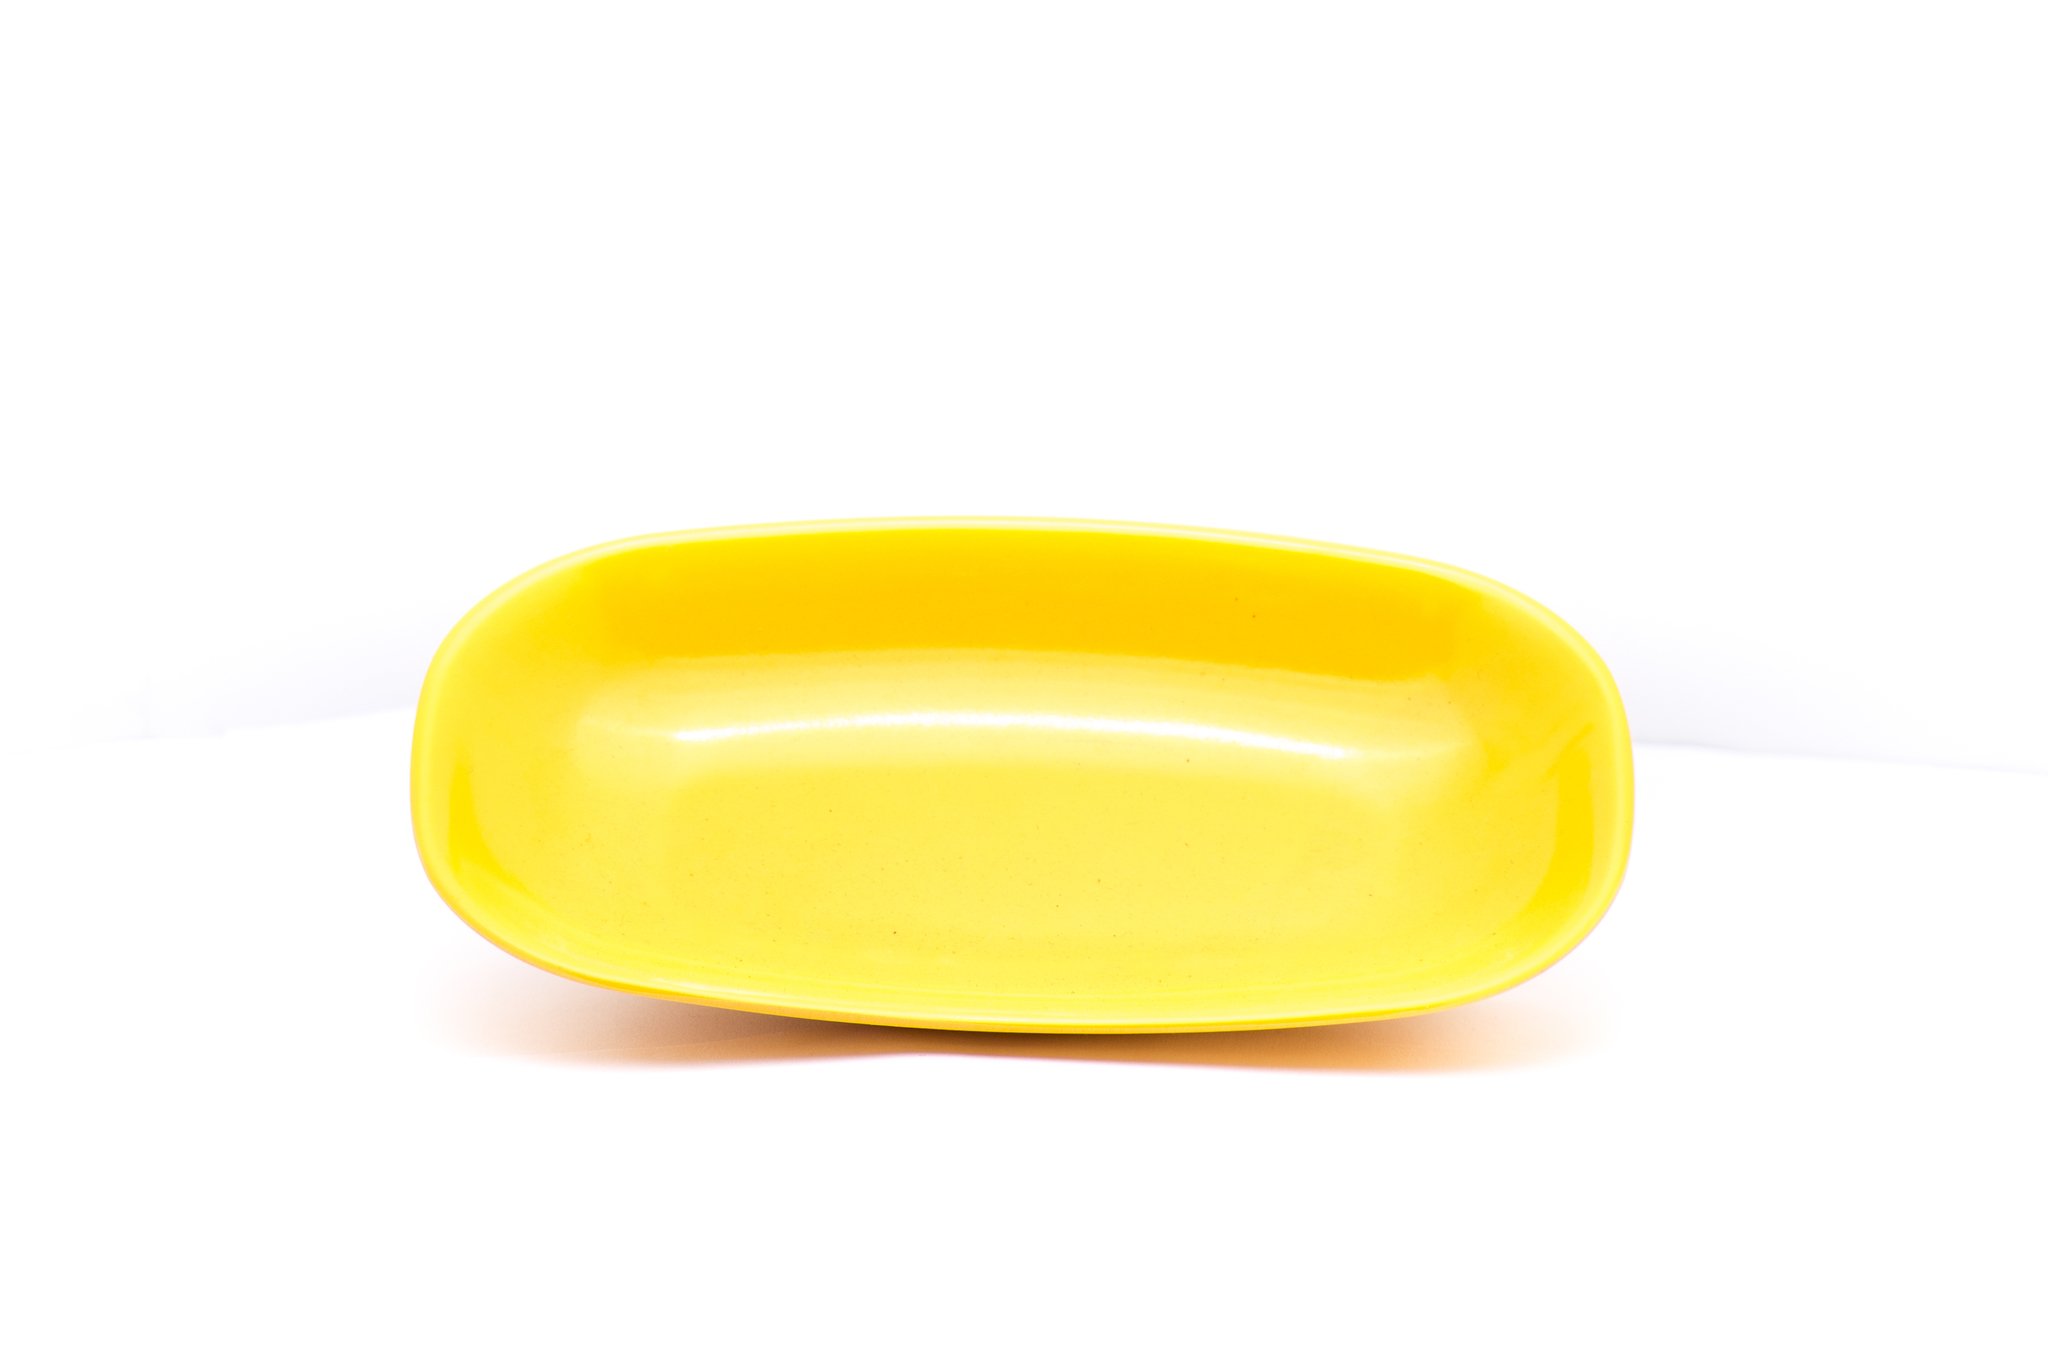 Destockage ravier oval jaune